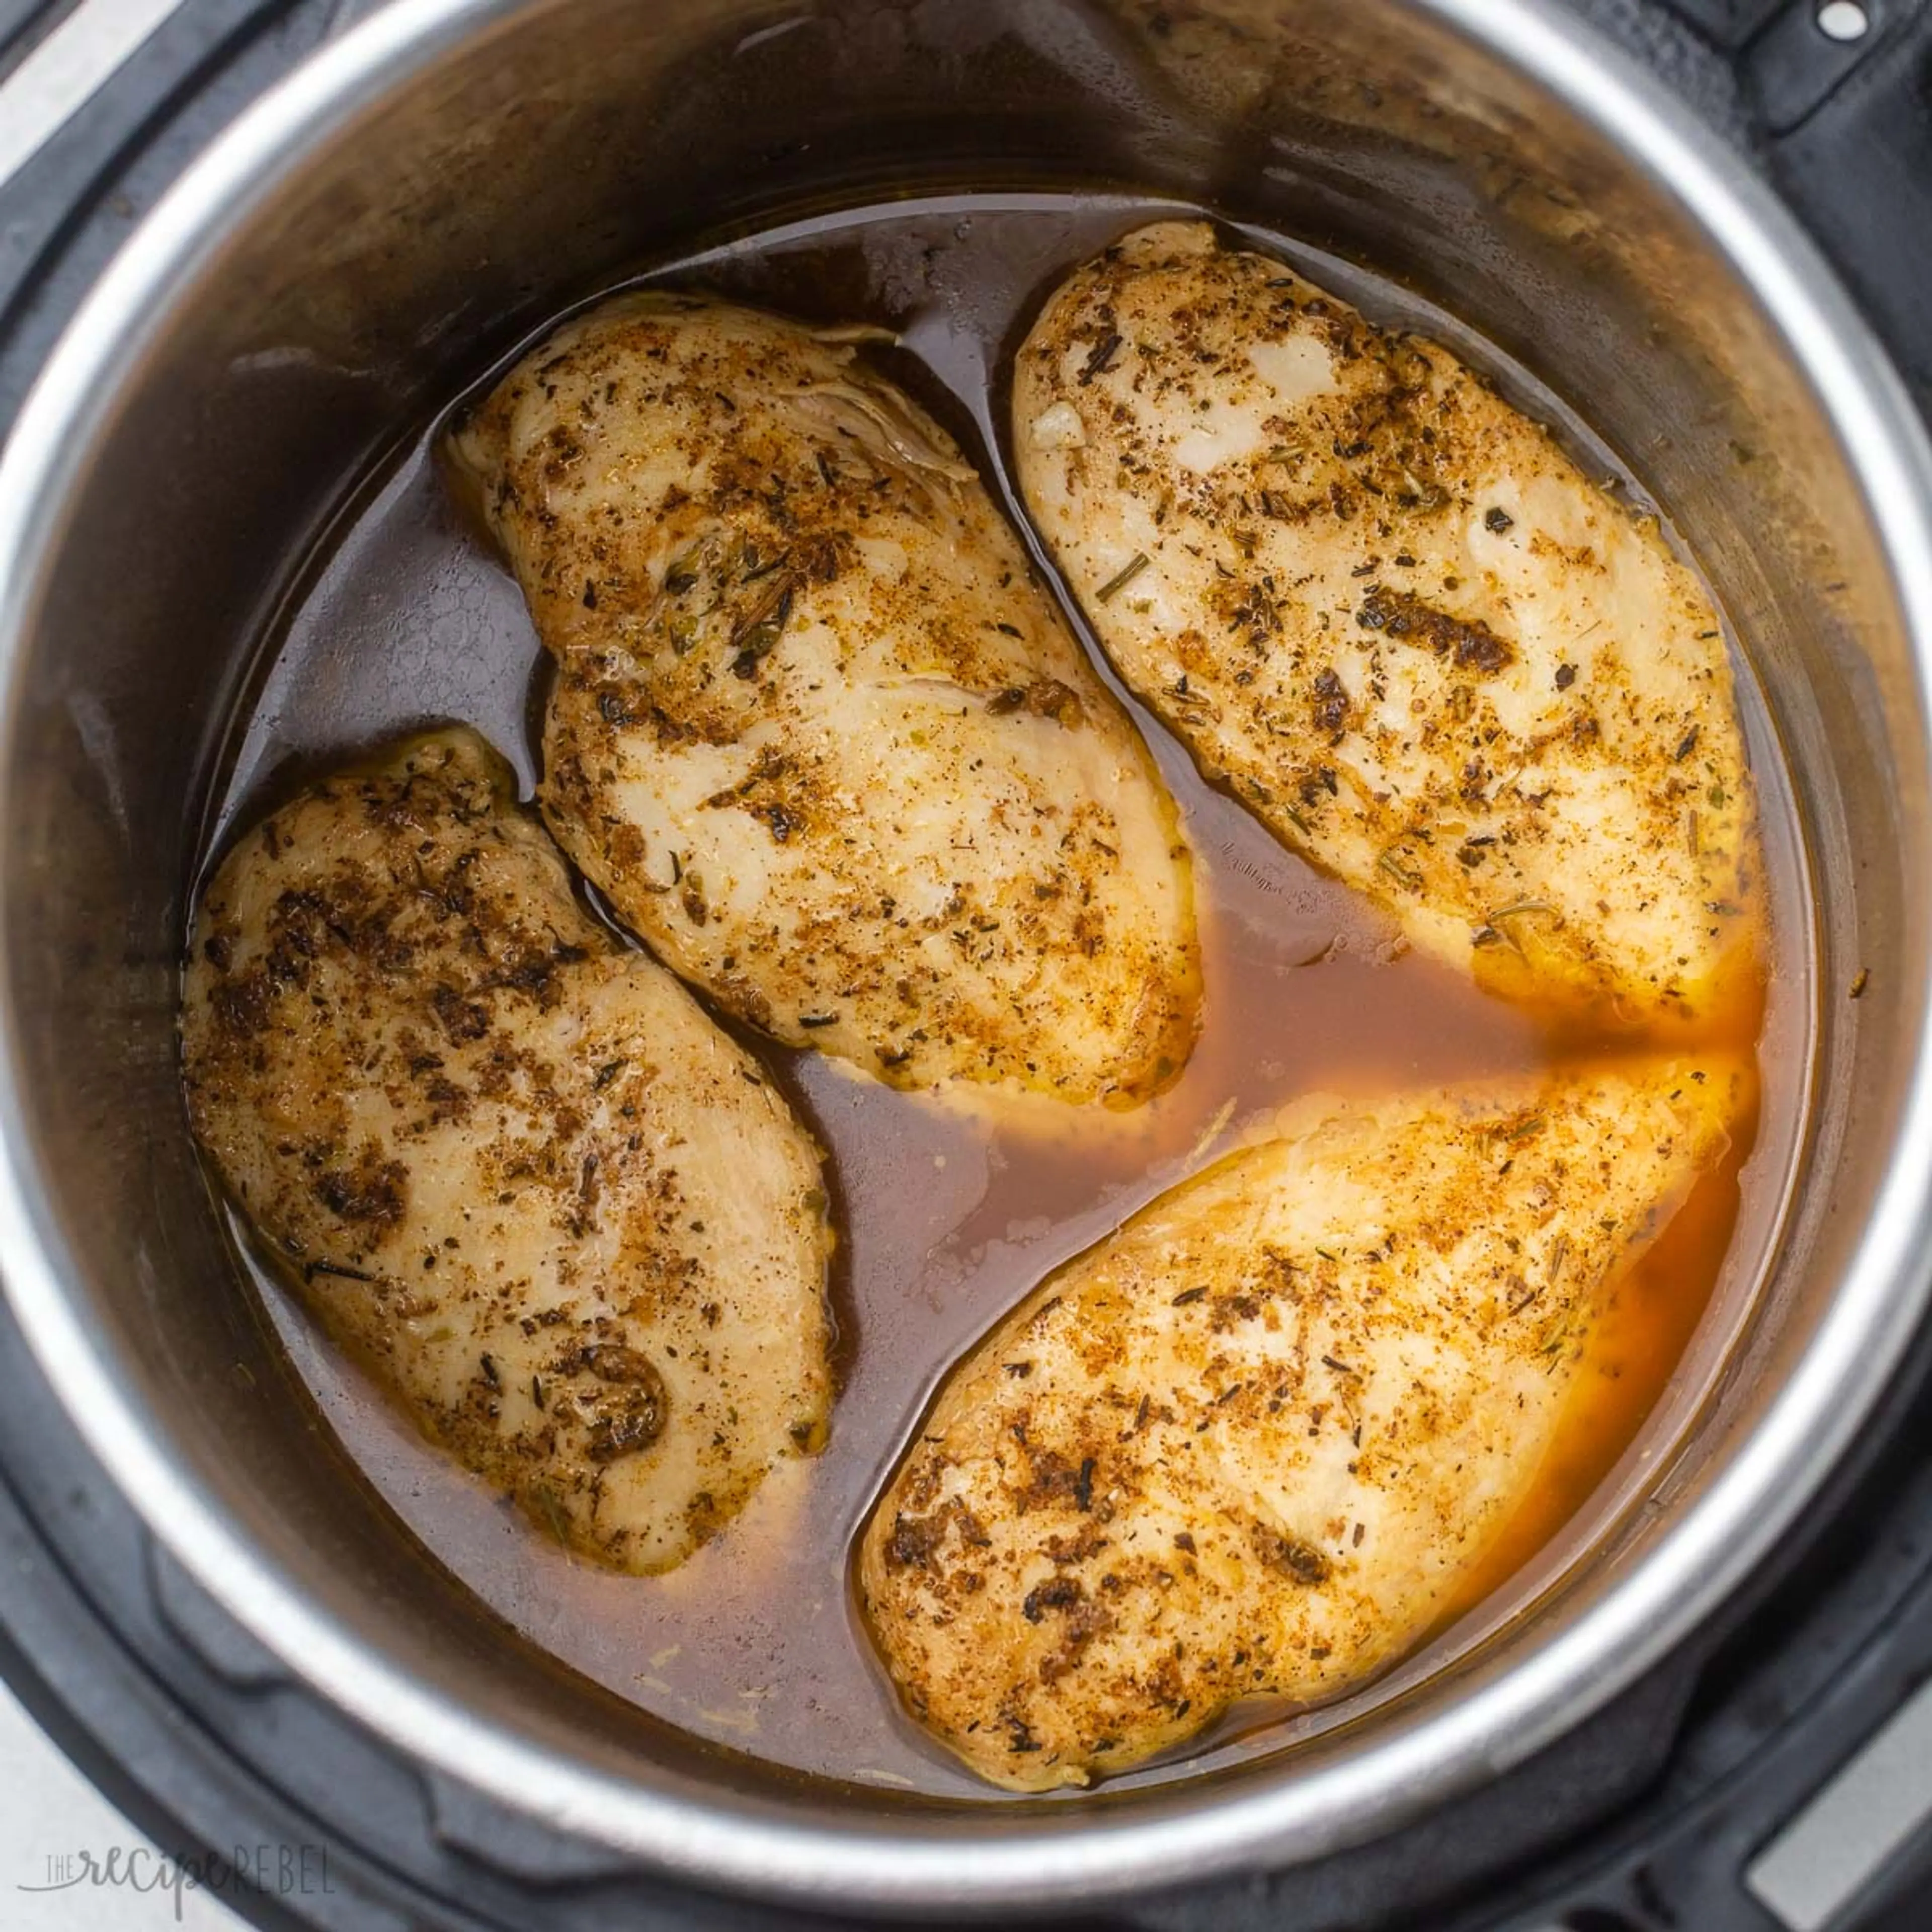 Juicy Instant Pot Chicken Breast